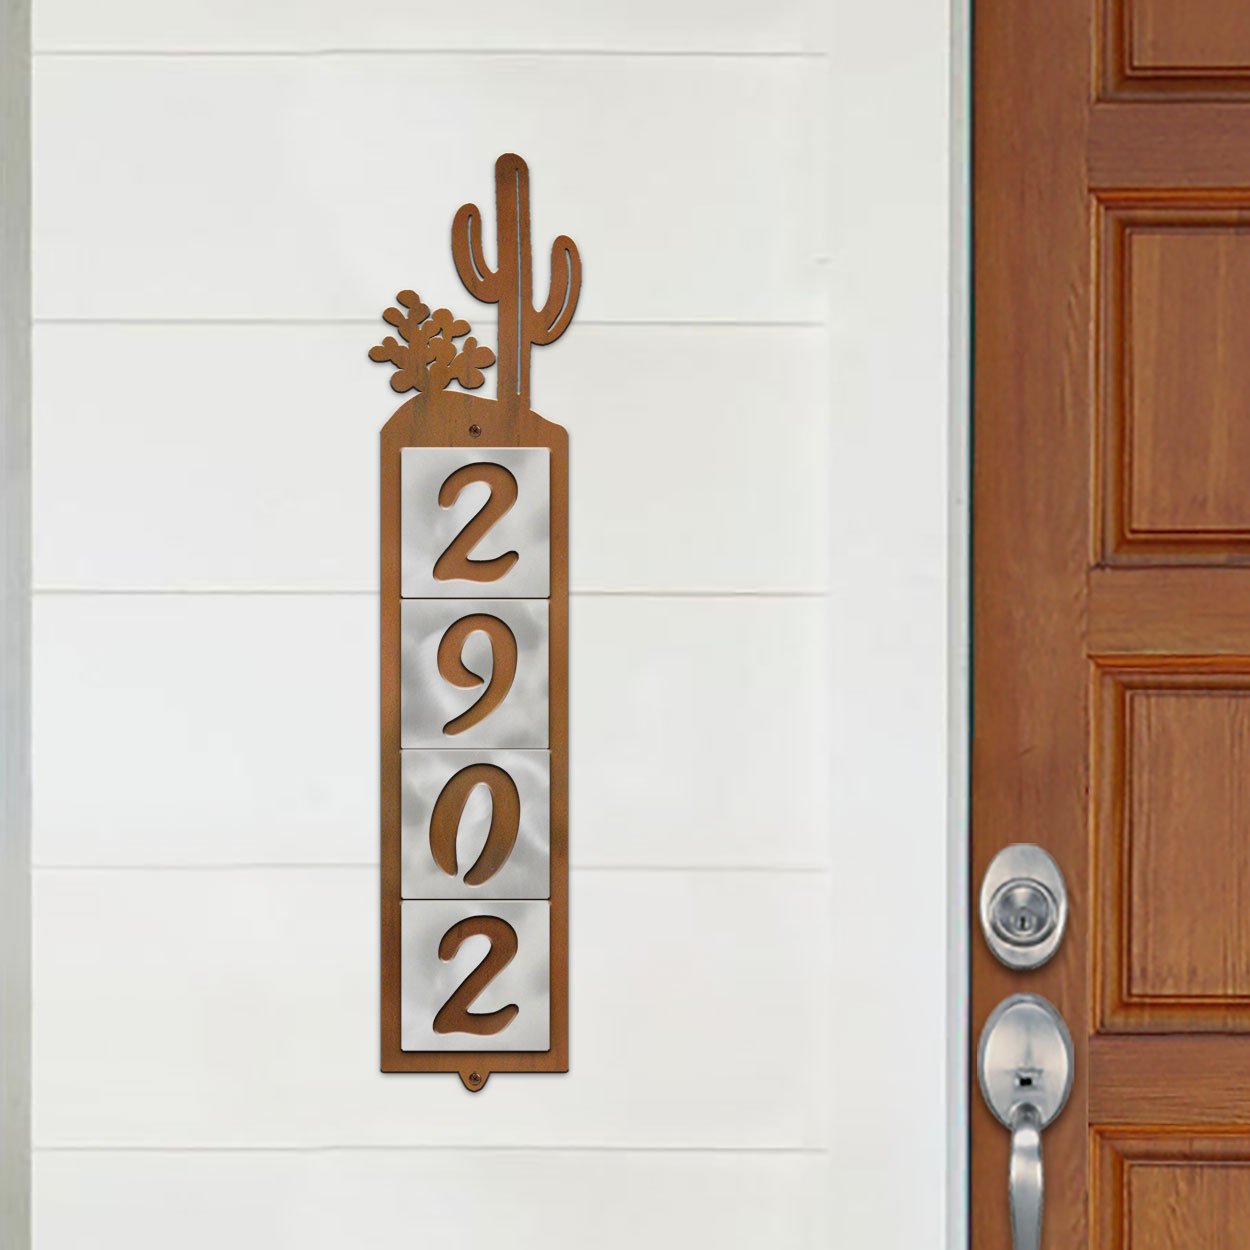 605044 - Cactus Design 4-Digit Vertical Tile House Numbers